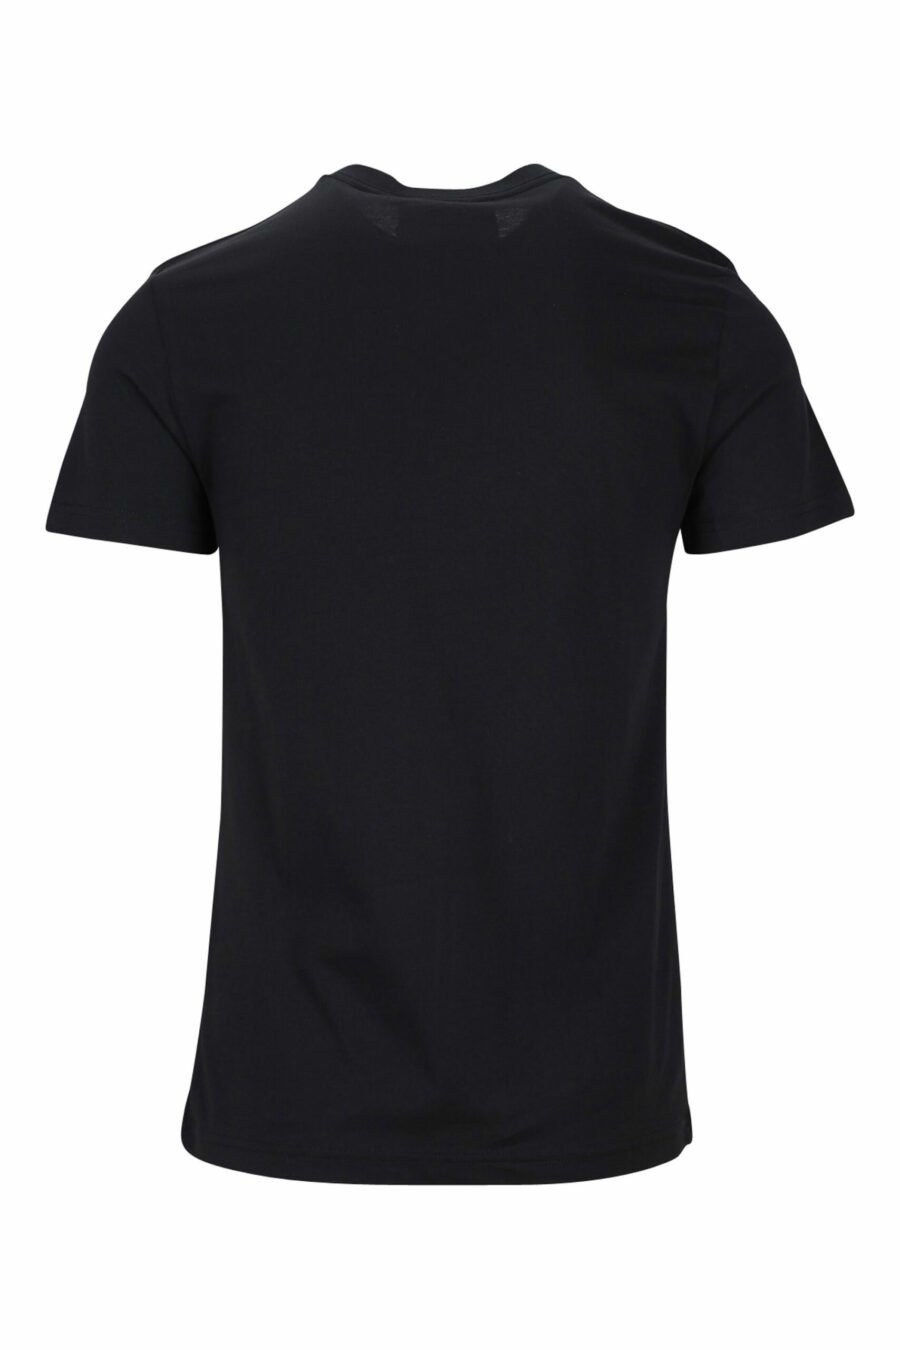 Camiseta negra con minilogo "piece number" dorado - 8052019456875 1 scaled